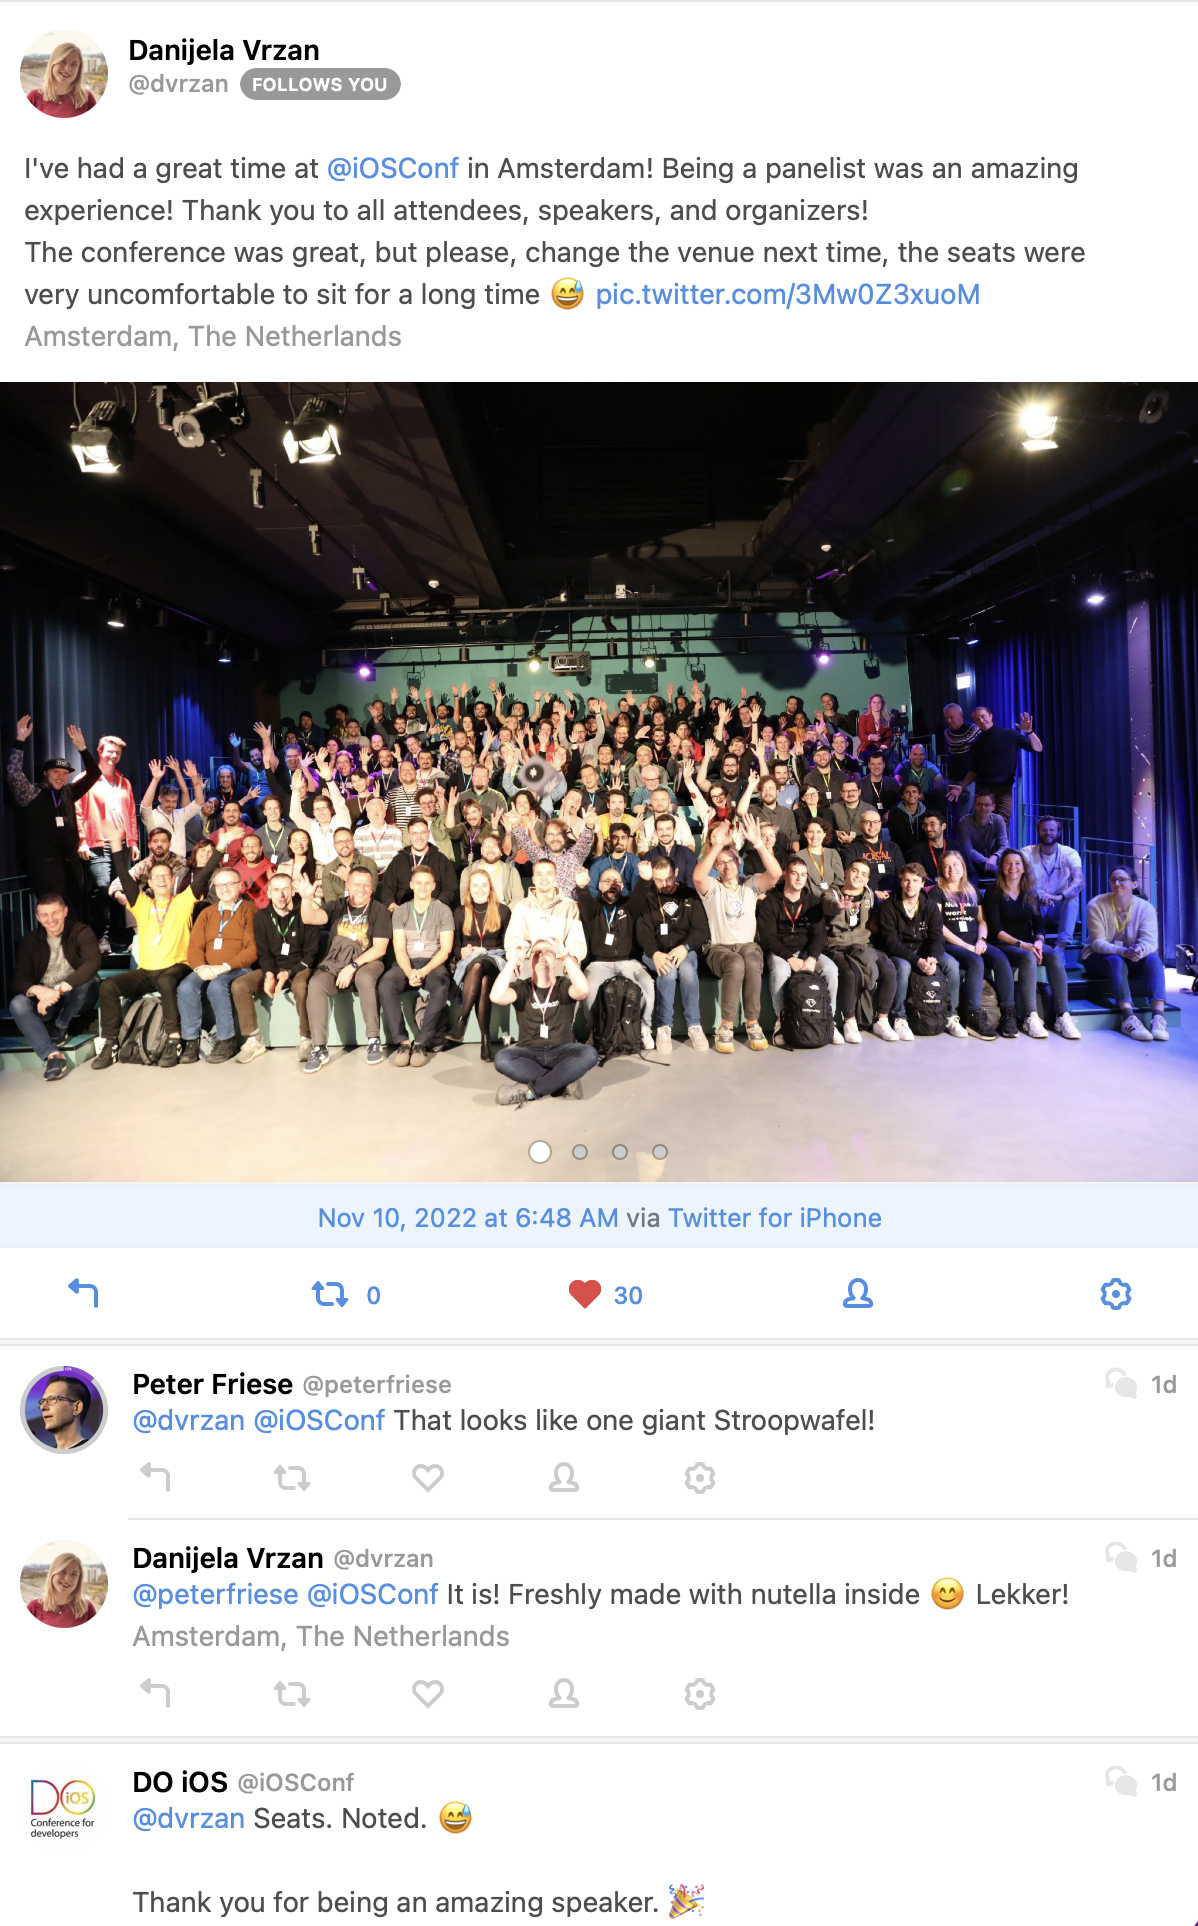 Danijela Vrzan’s crowd photo from speaking in iOSConf